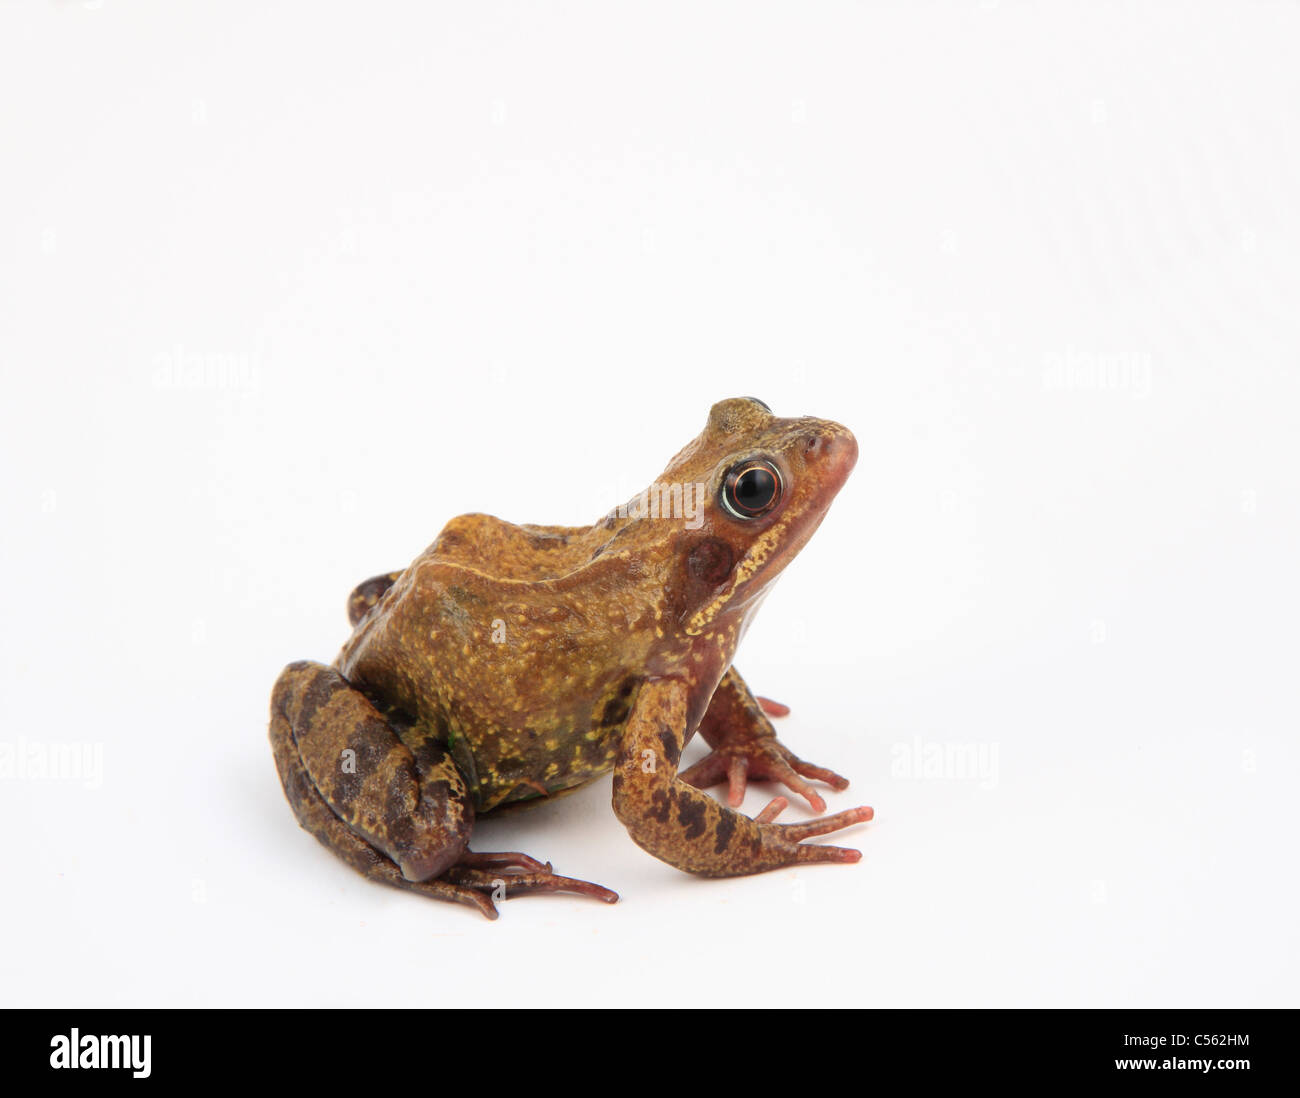 cutout Rana Temporia common frog UK specimen against a white background Stock Photo